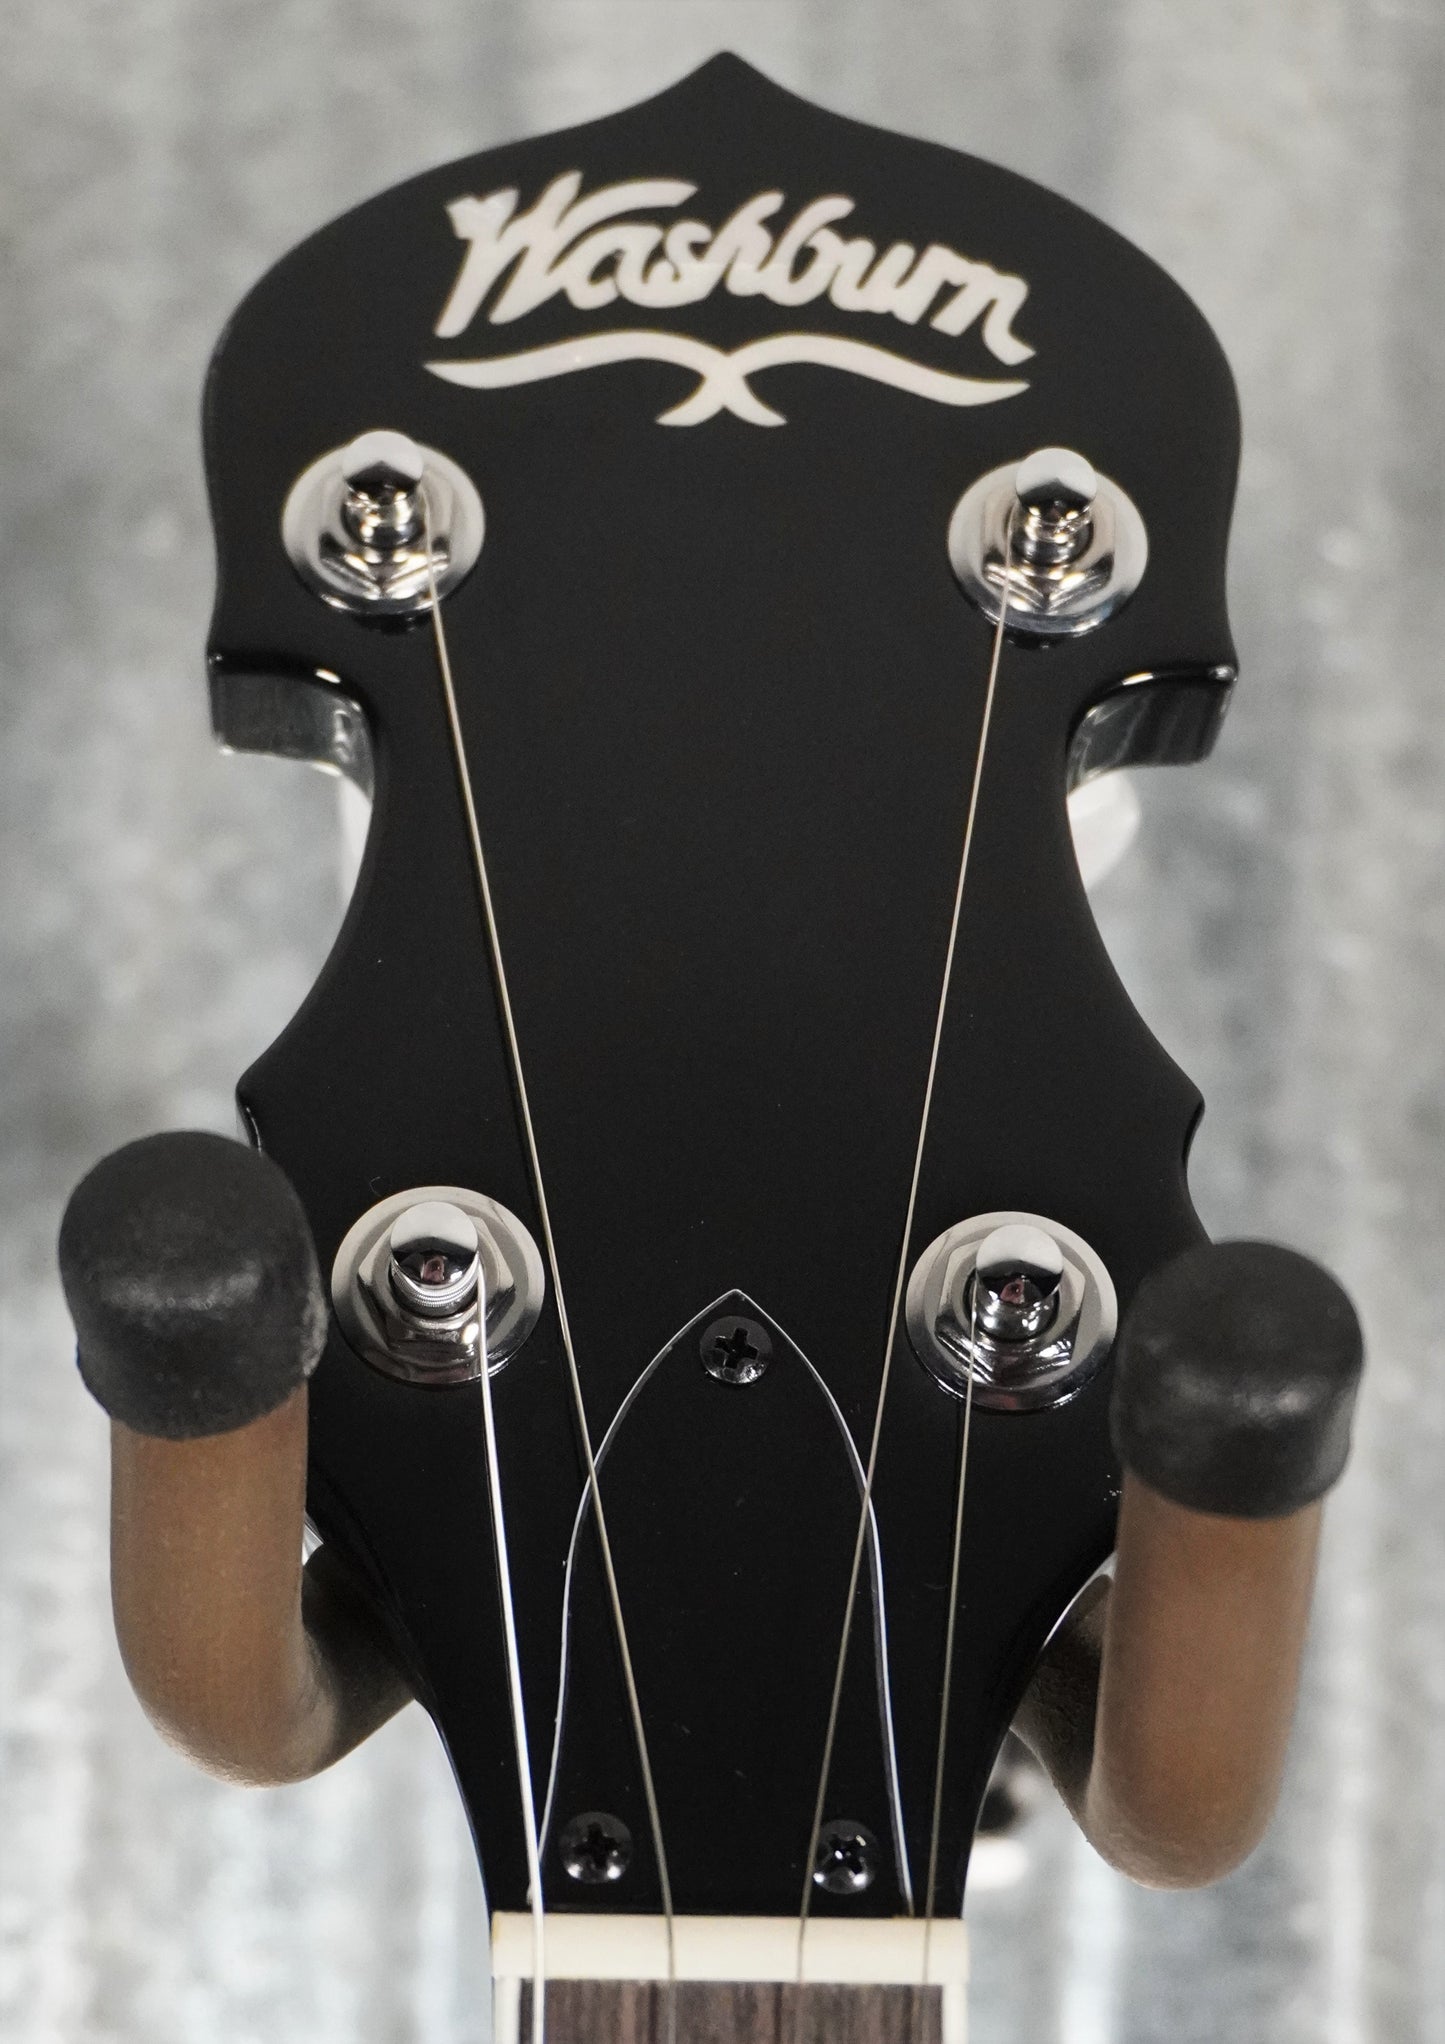 Washburn Americana B11 5 String Closed Back Banjo B11K-A-U #1197